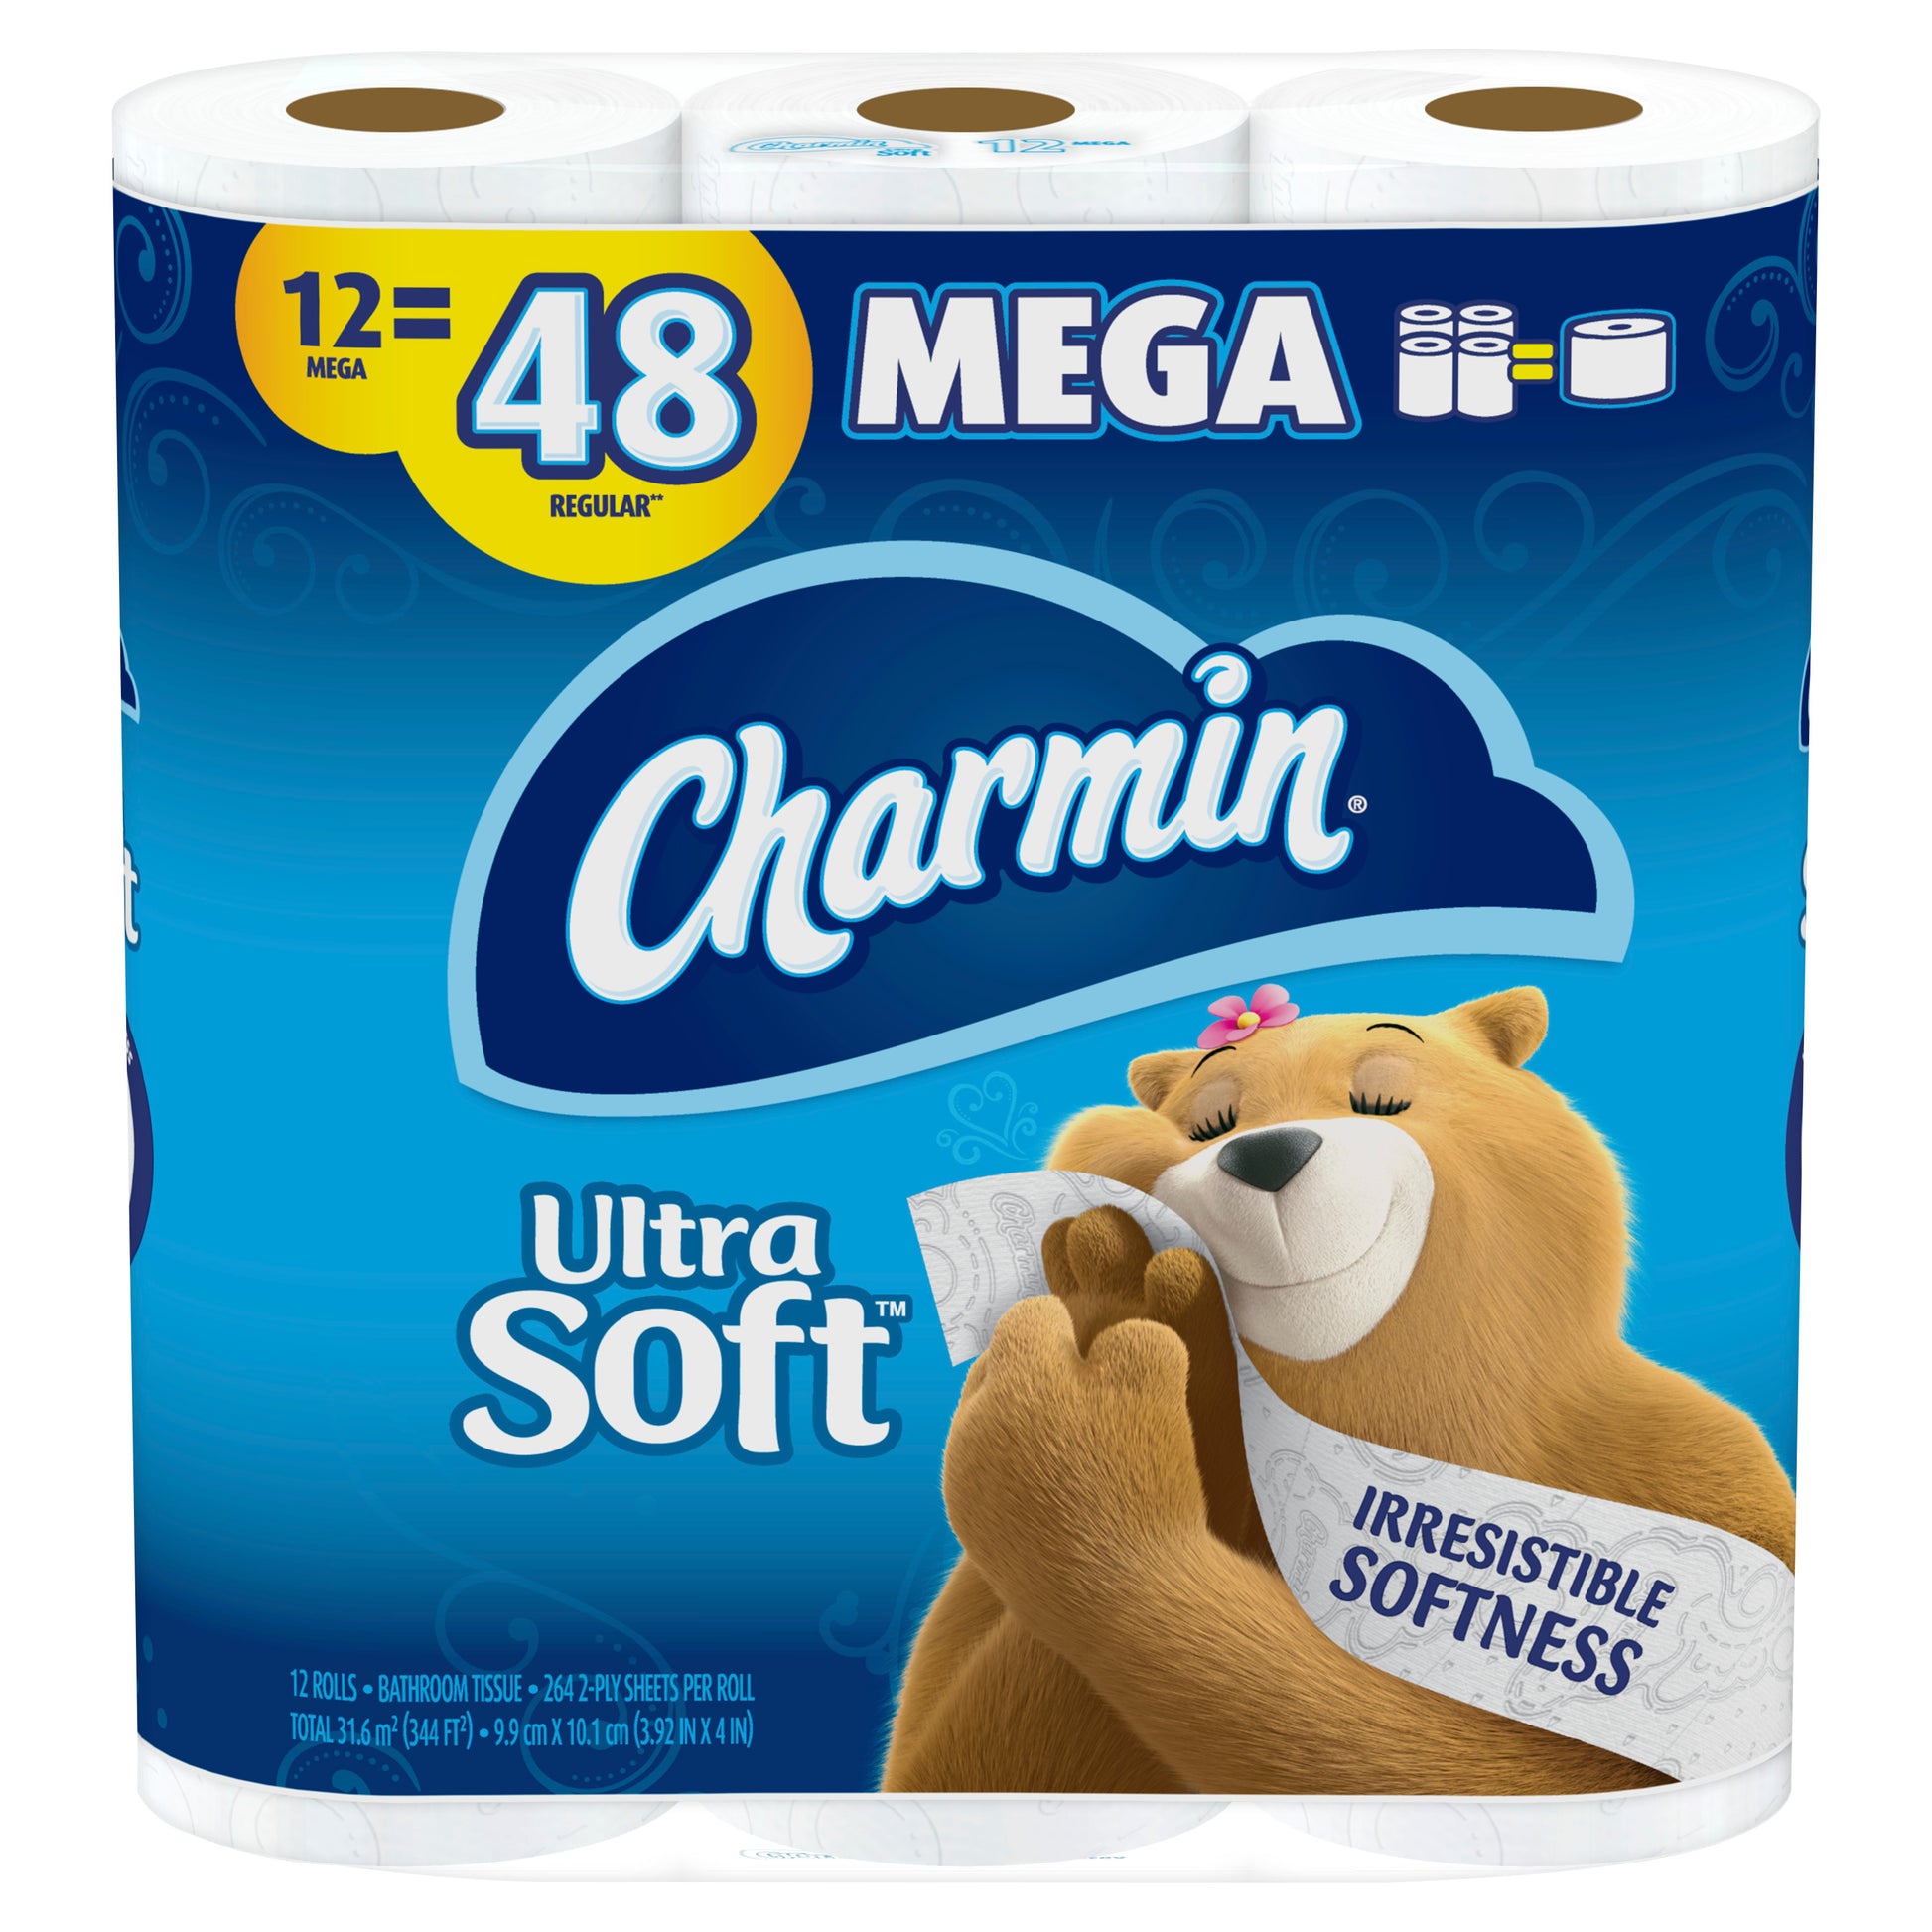 Charmin Ultra Soft Toilet Paper 12 = 48 Mega Rolls, 3168 Sheets – Rafaelos